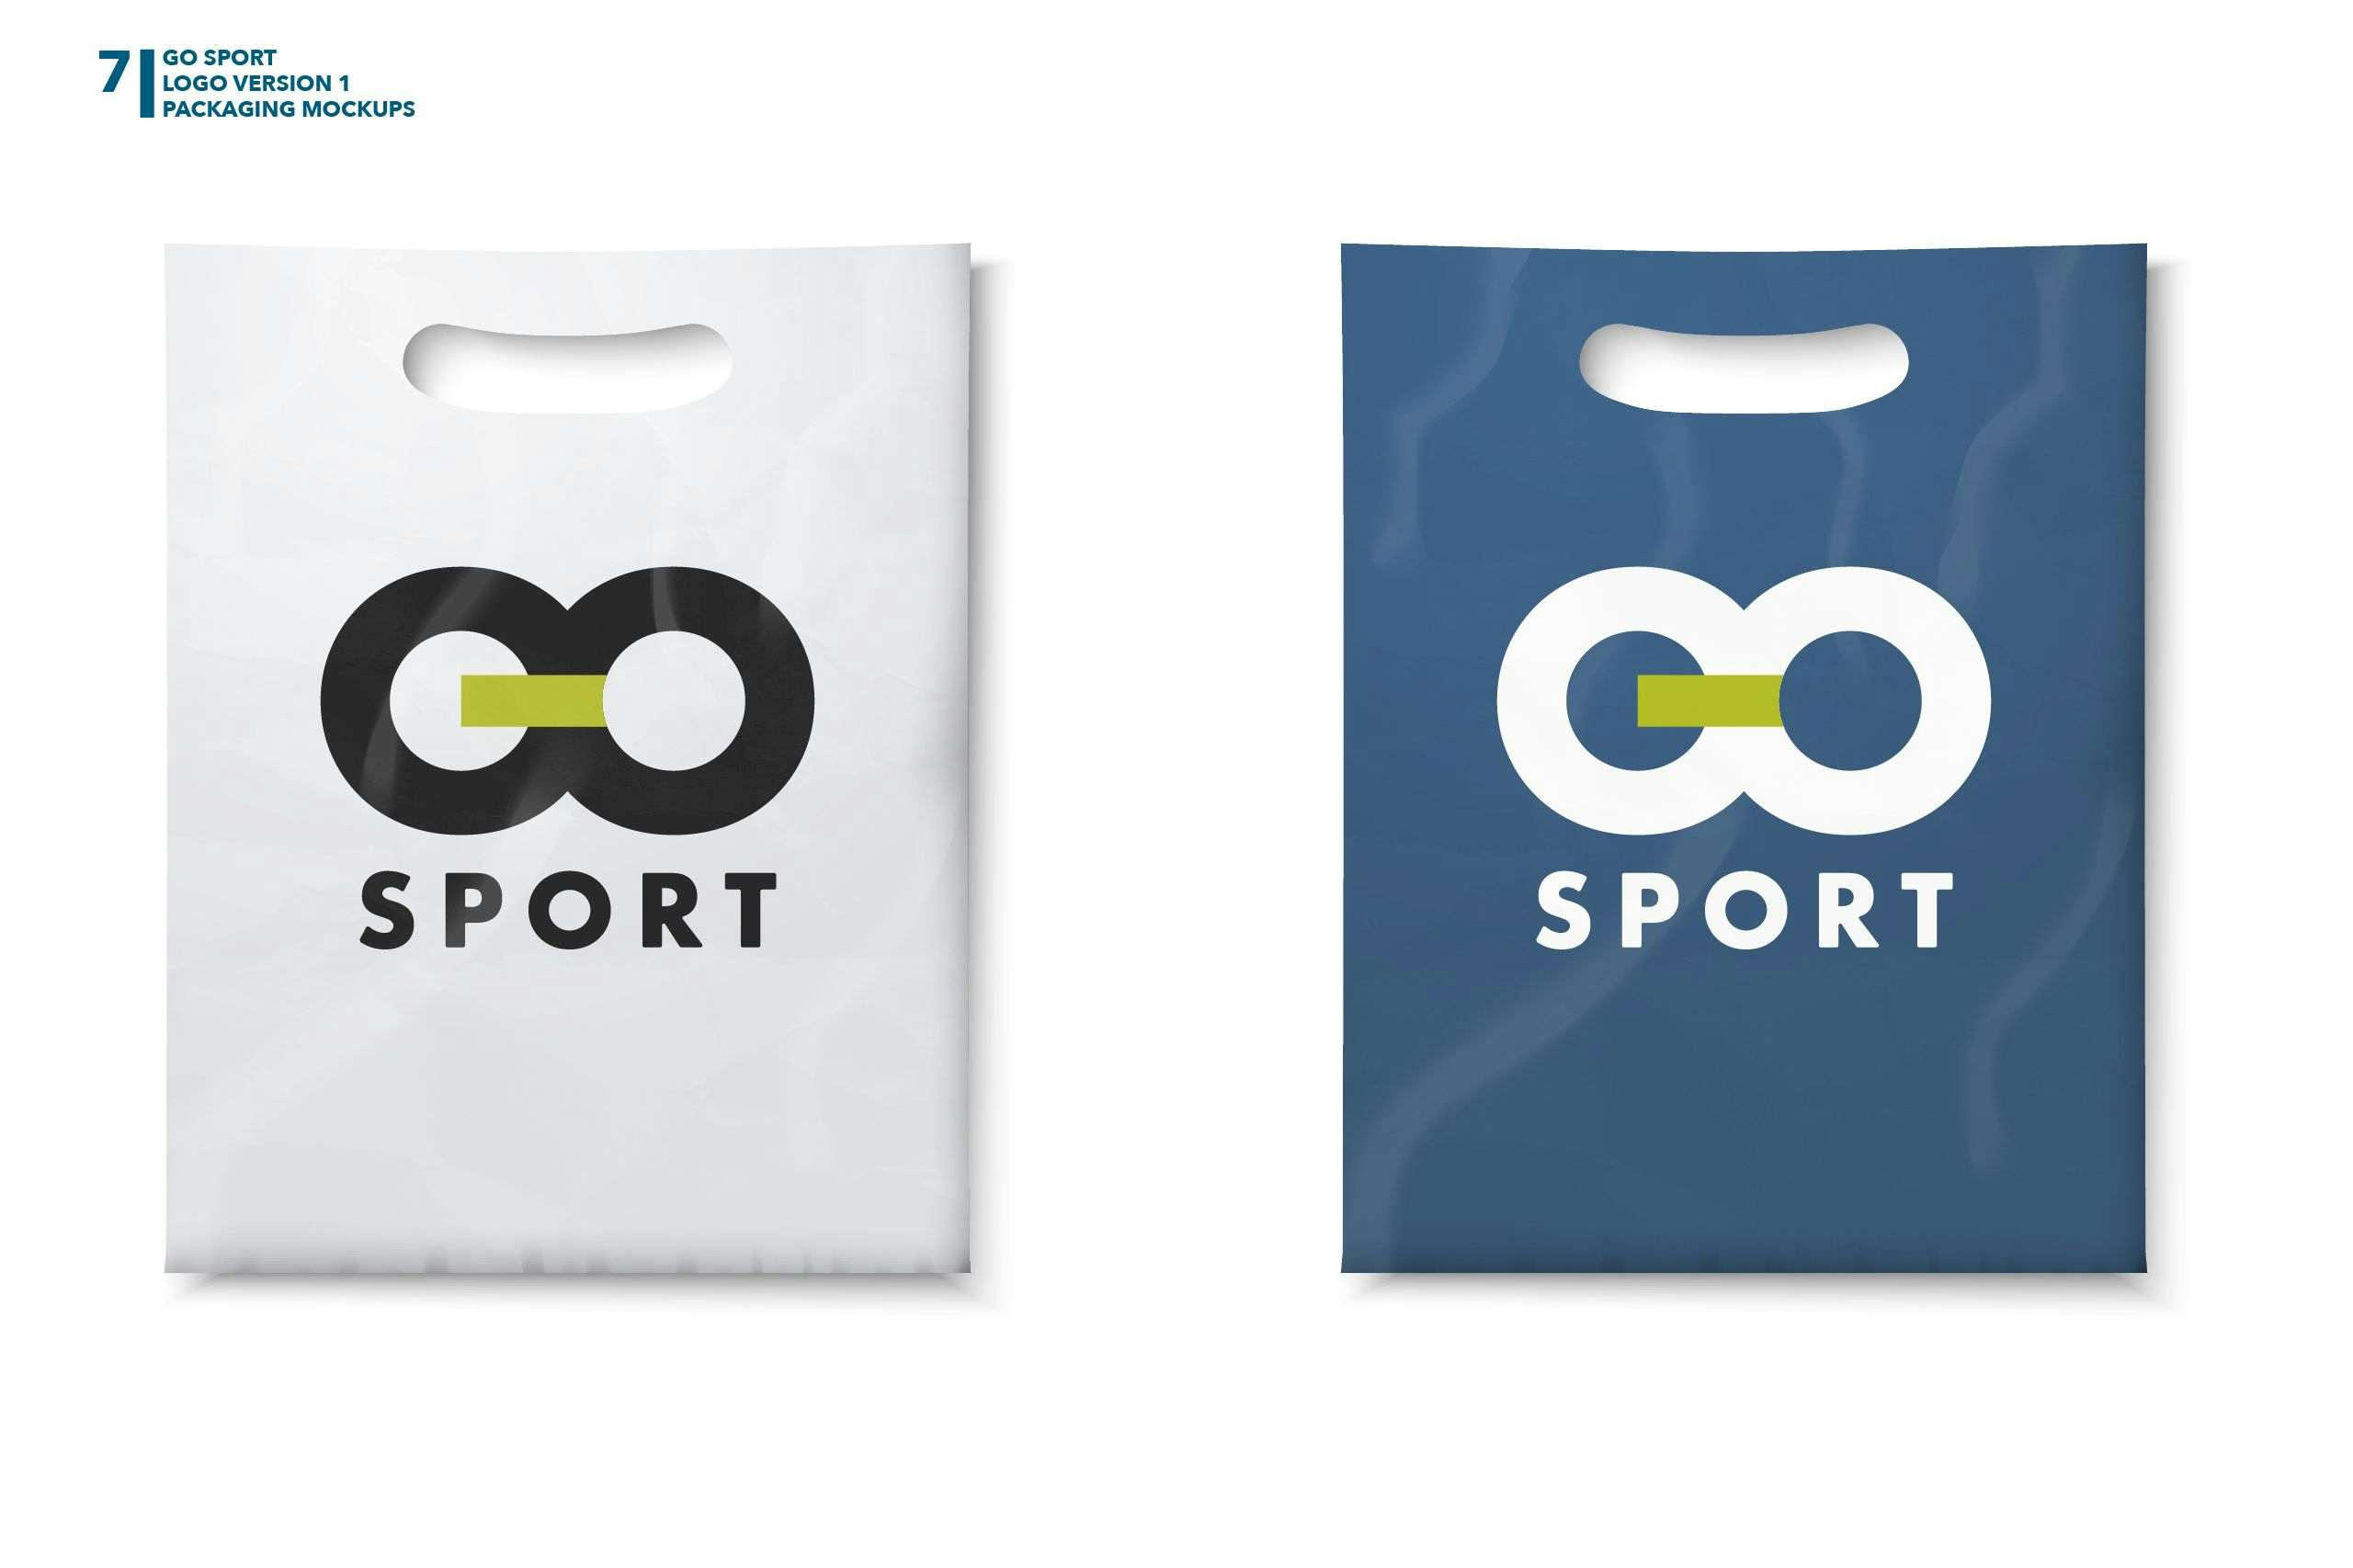 Go Sport logo redesign proposal by Xavier Wendling. Packaging mockups.